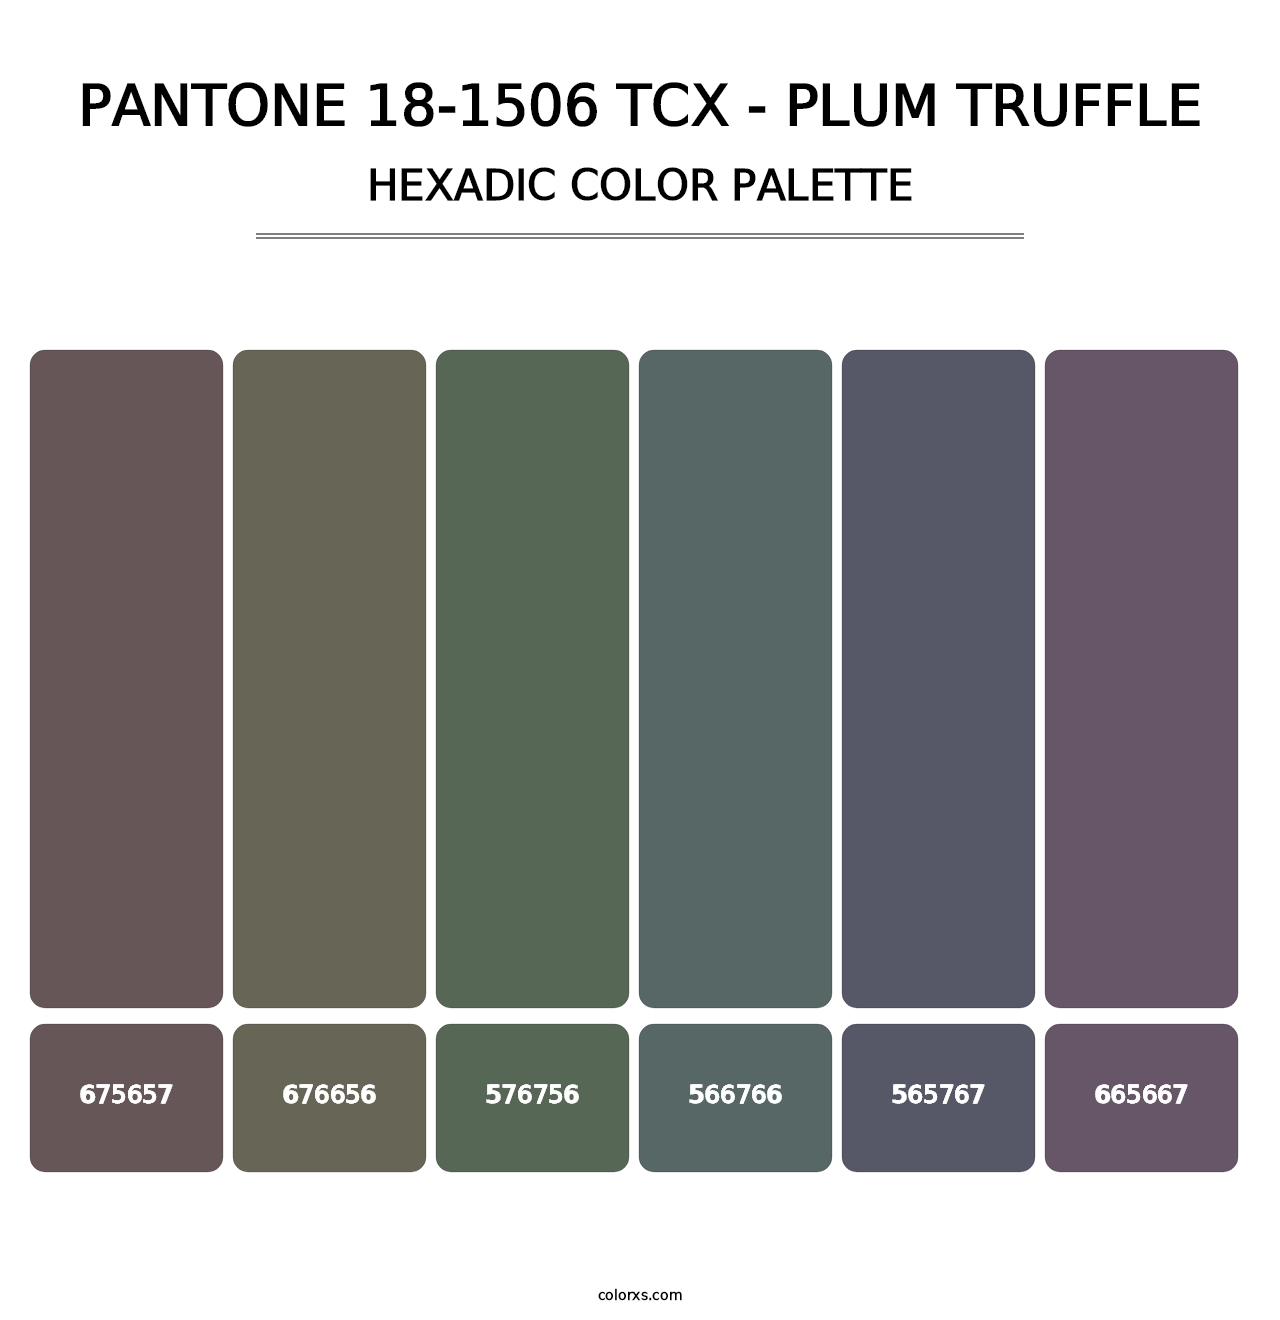 PANTONE 18-1506 TCX - Plum Truffle - Hexadic Color Palette